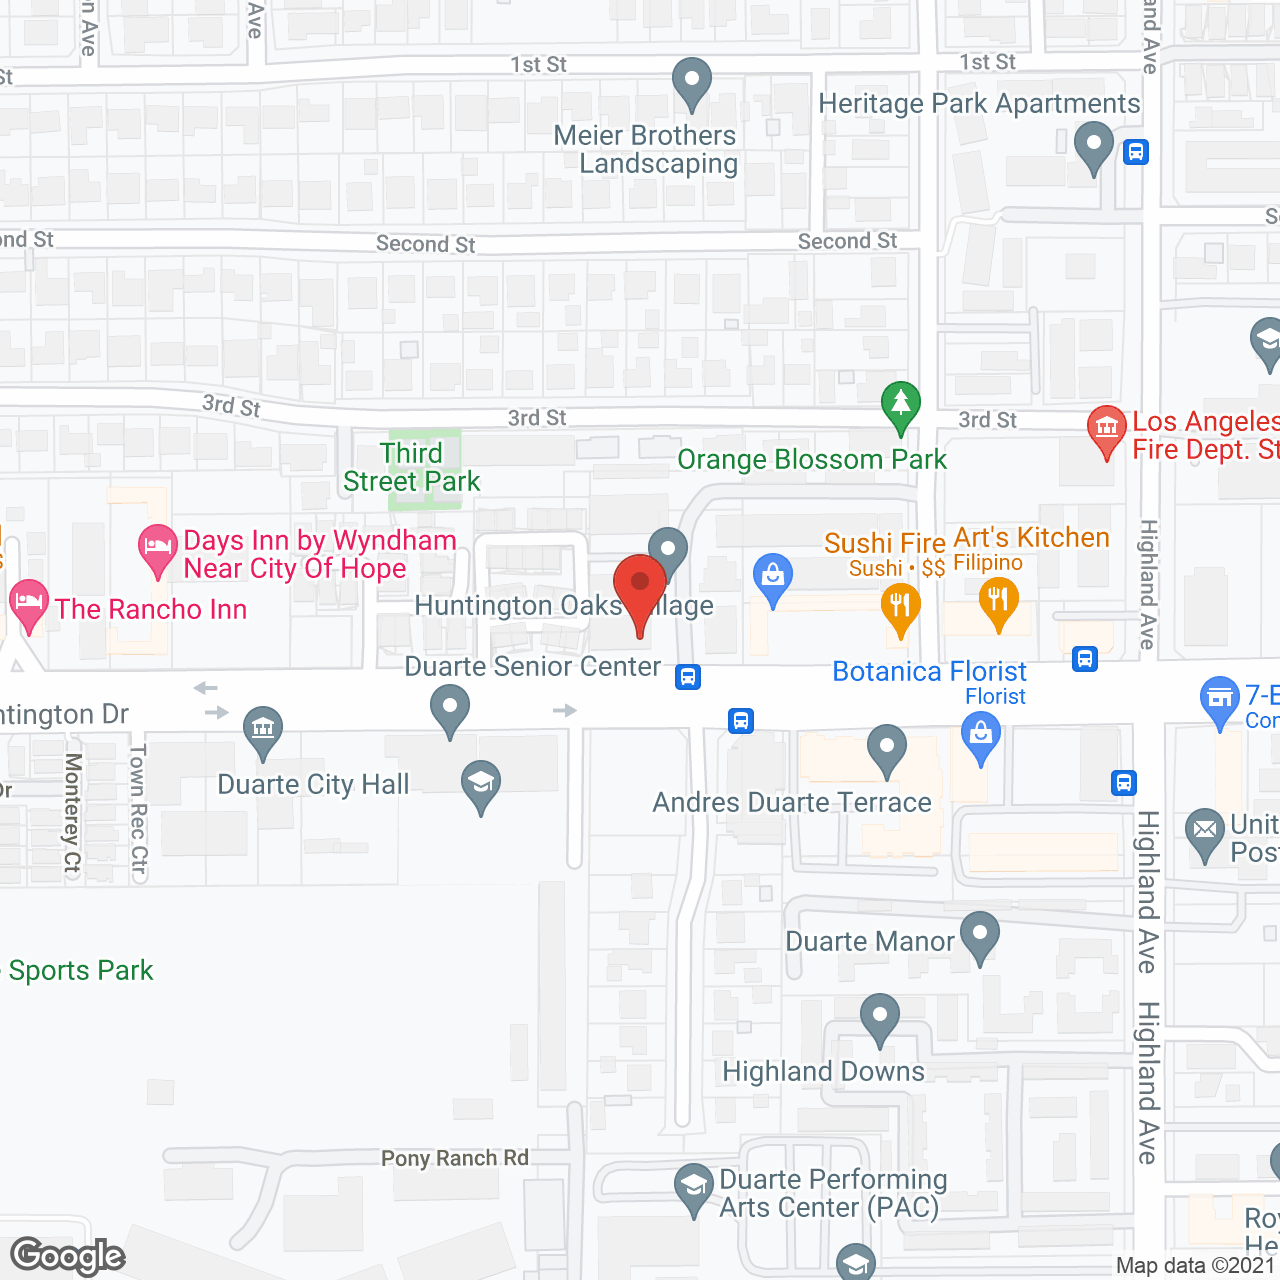 Huntington Oaks Village in google map